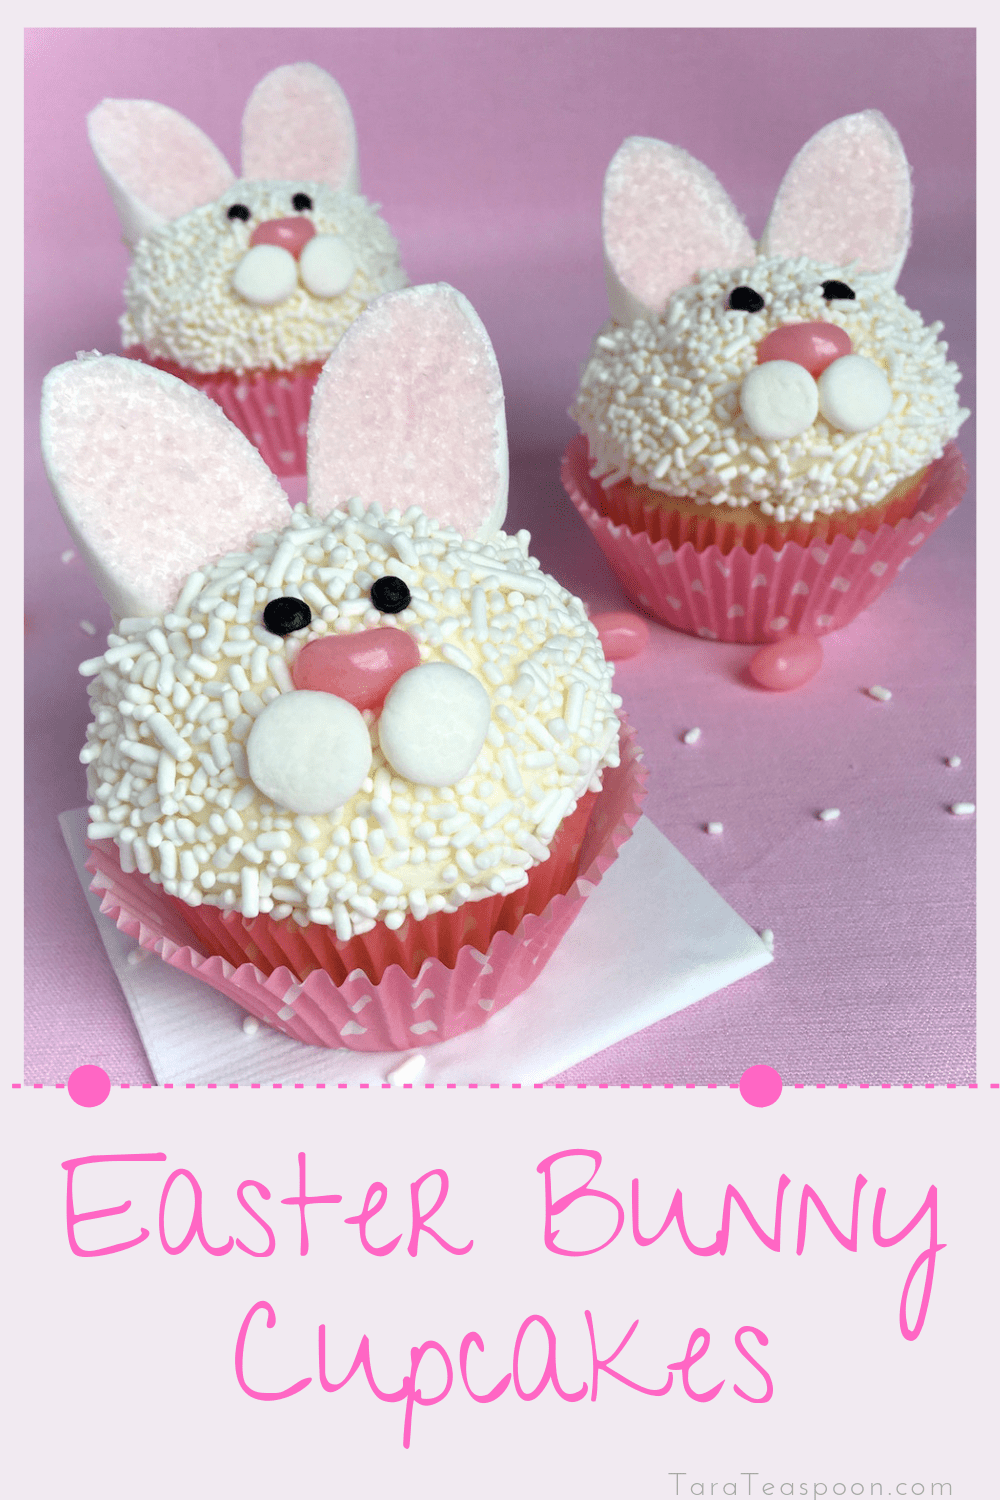 Easy Easter Bunny Cupcakes and Chick Cupcakes | Tara Teaspoon